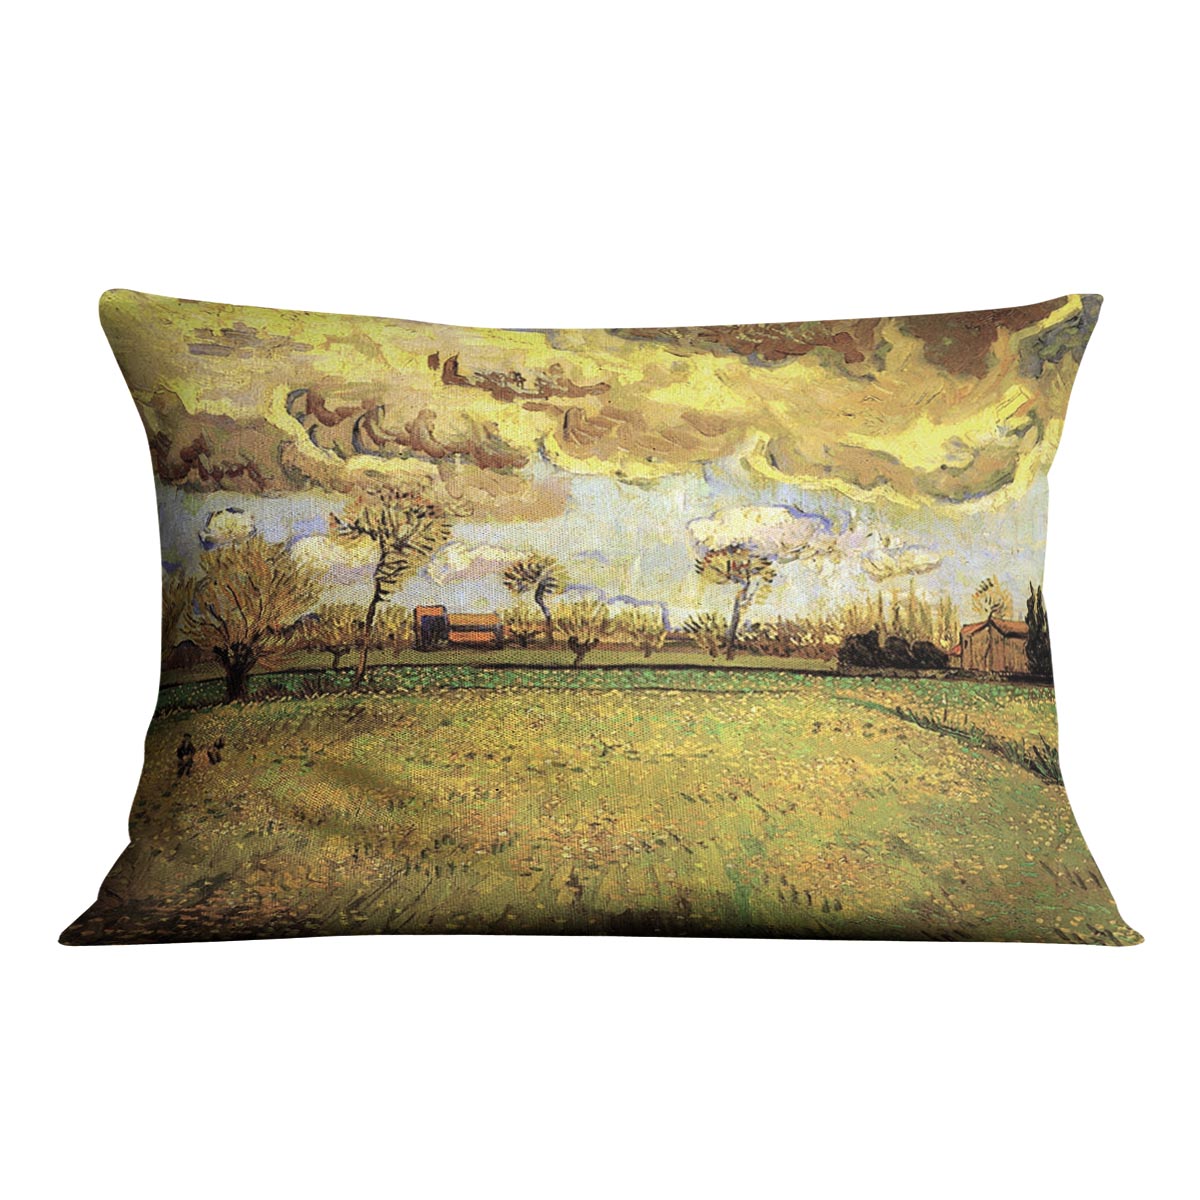 Landscape Under a Stormy Sky by Van Gogh Cushion